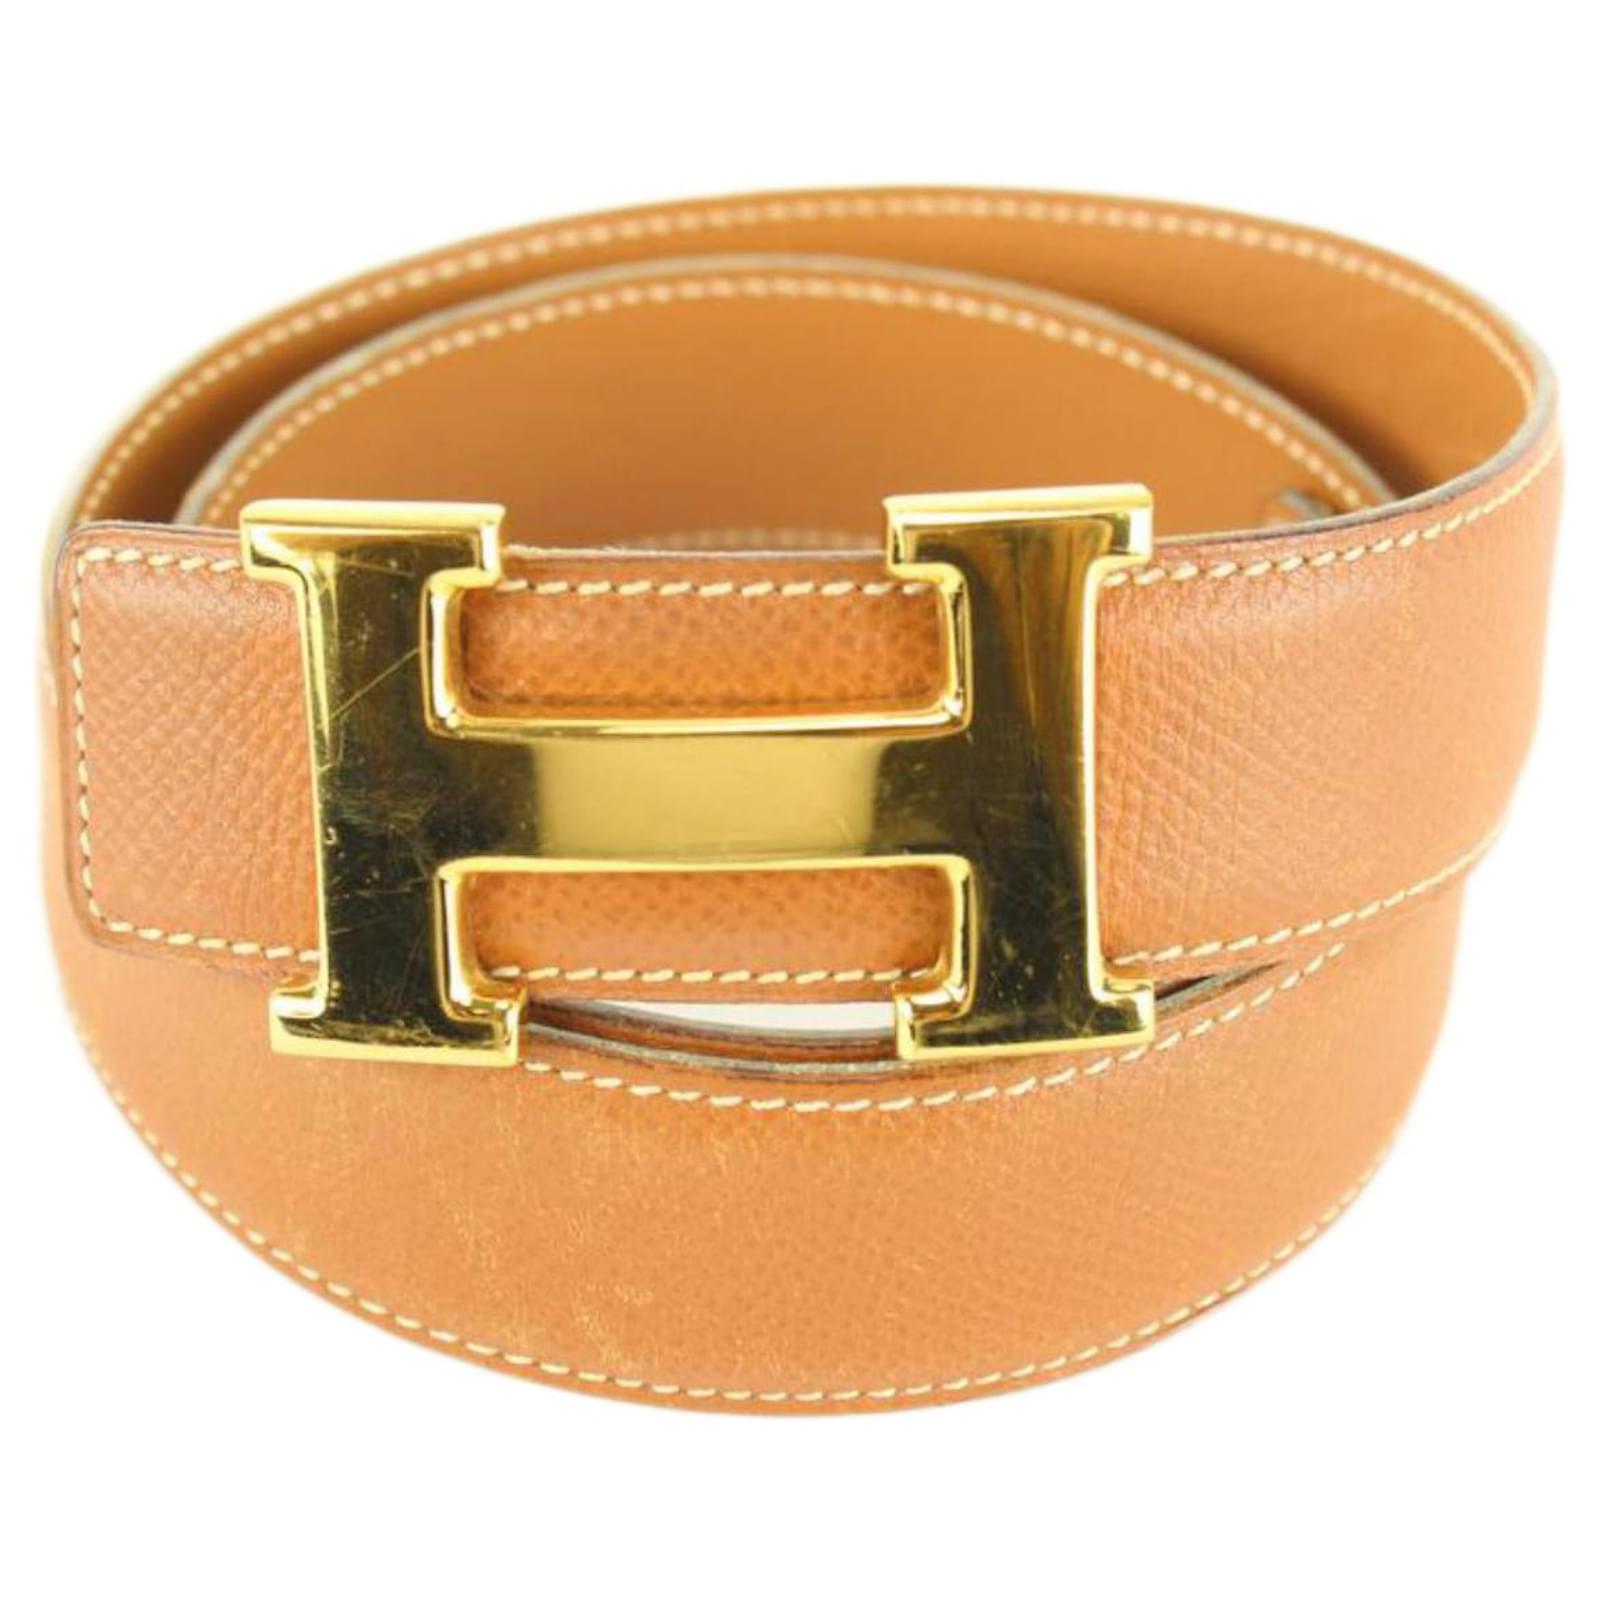 Hermes Belt Constance Buckle H Reversible Size 65